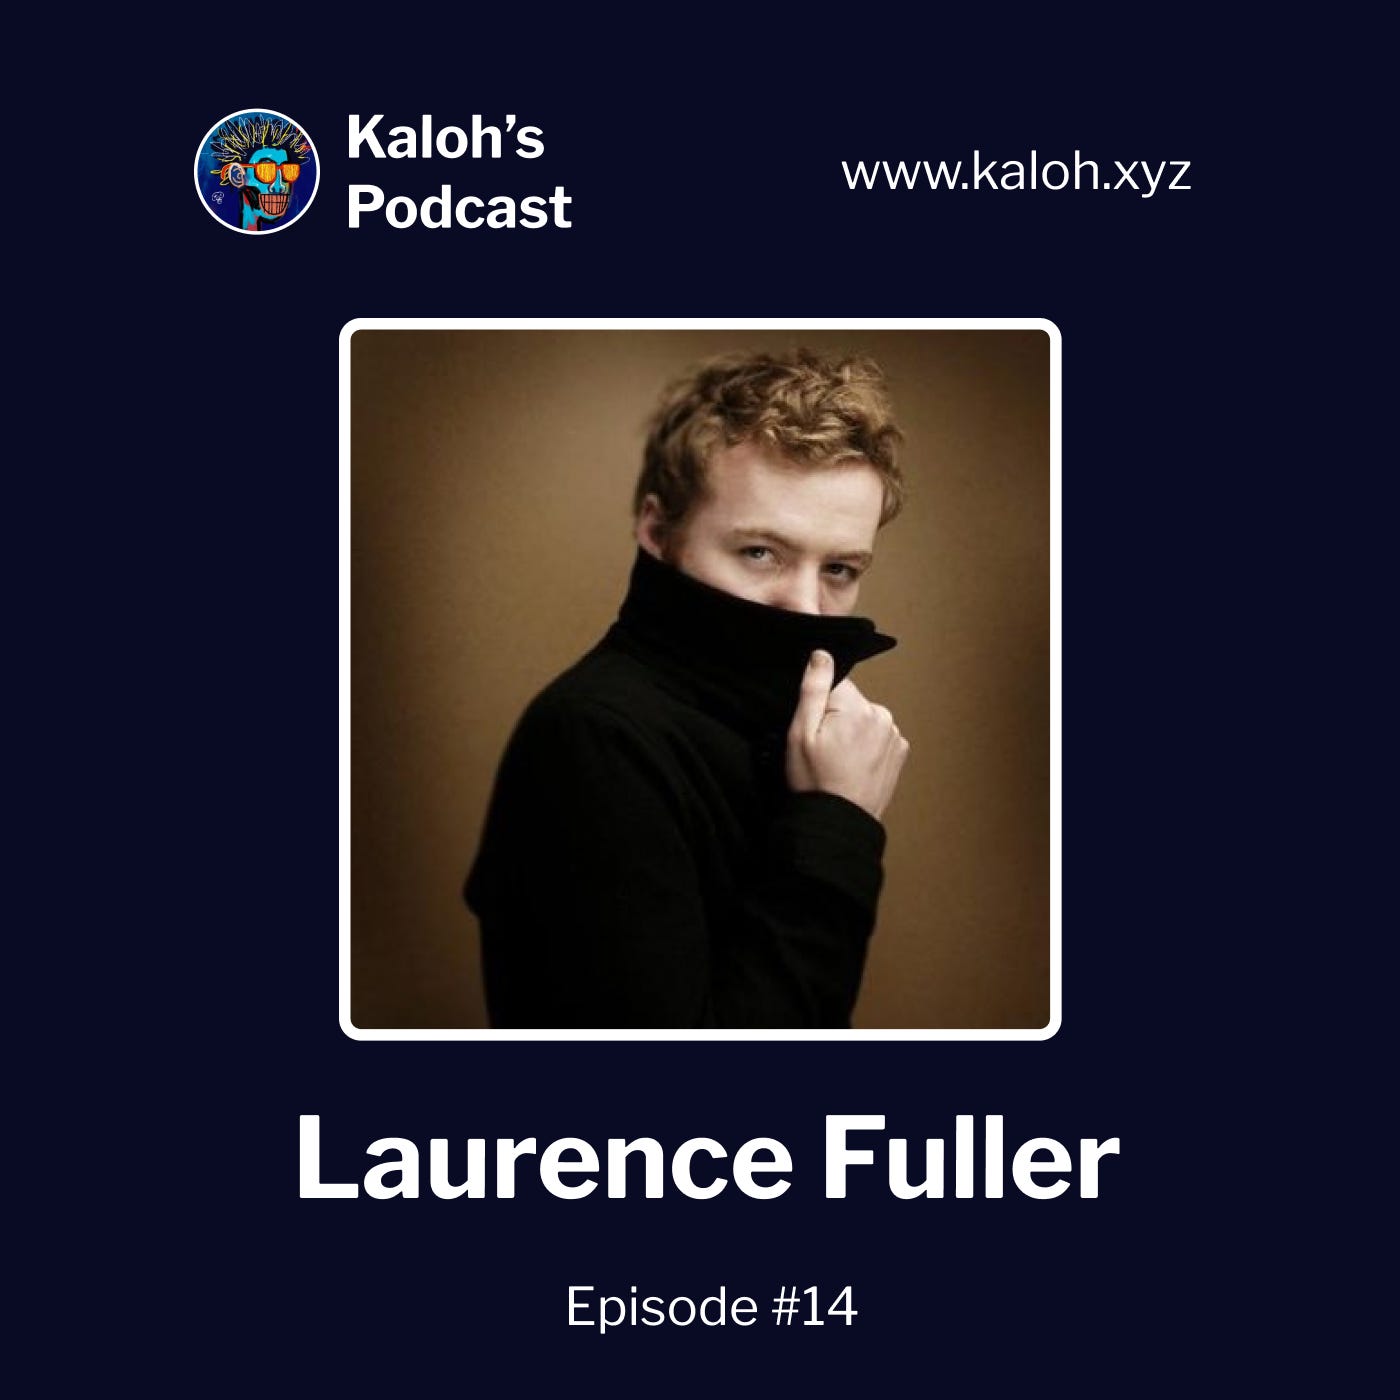 Kaloh's Podcast episode 14: Laurence Fuller